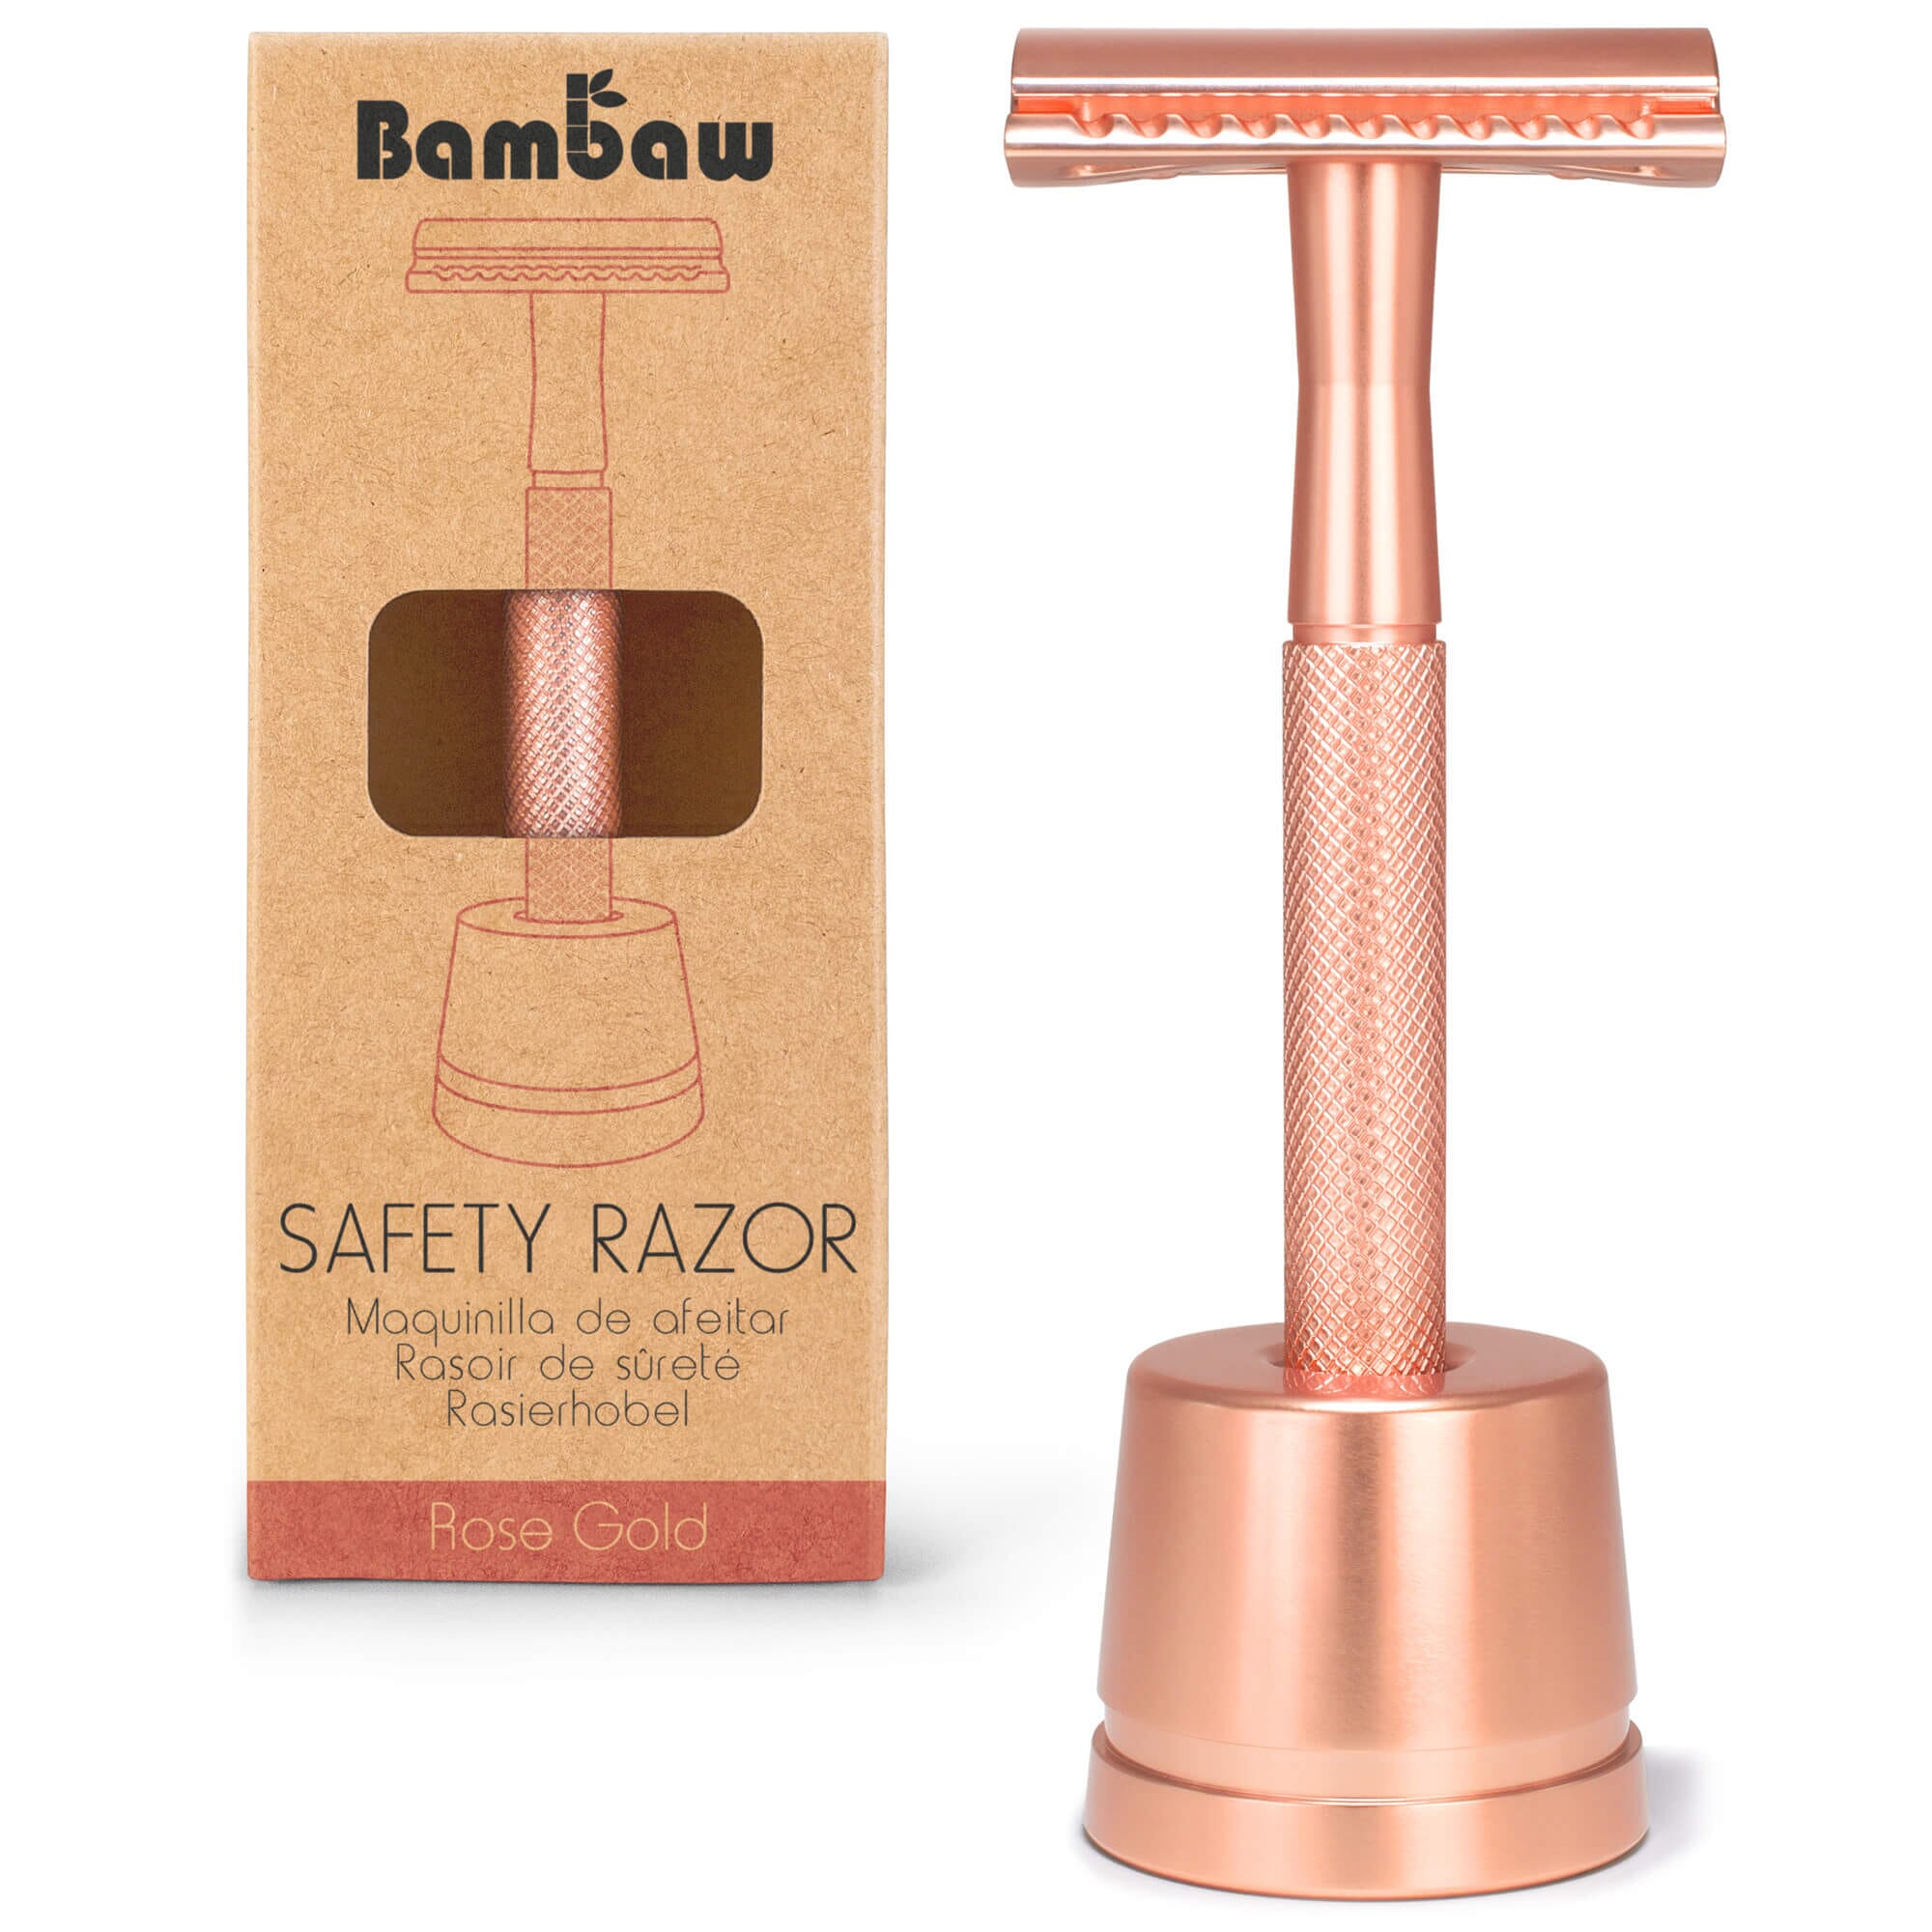 Se Bambaw safety razor med holder + blad rose gold hos Suztain